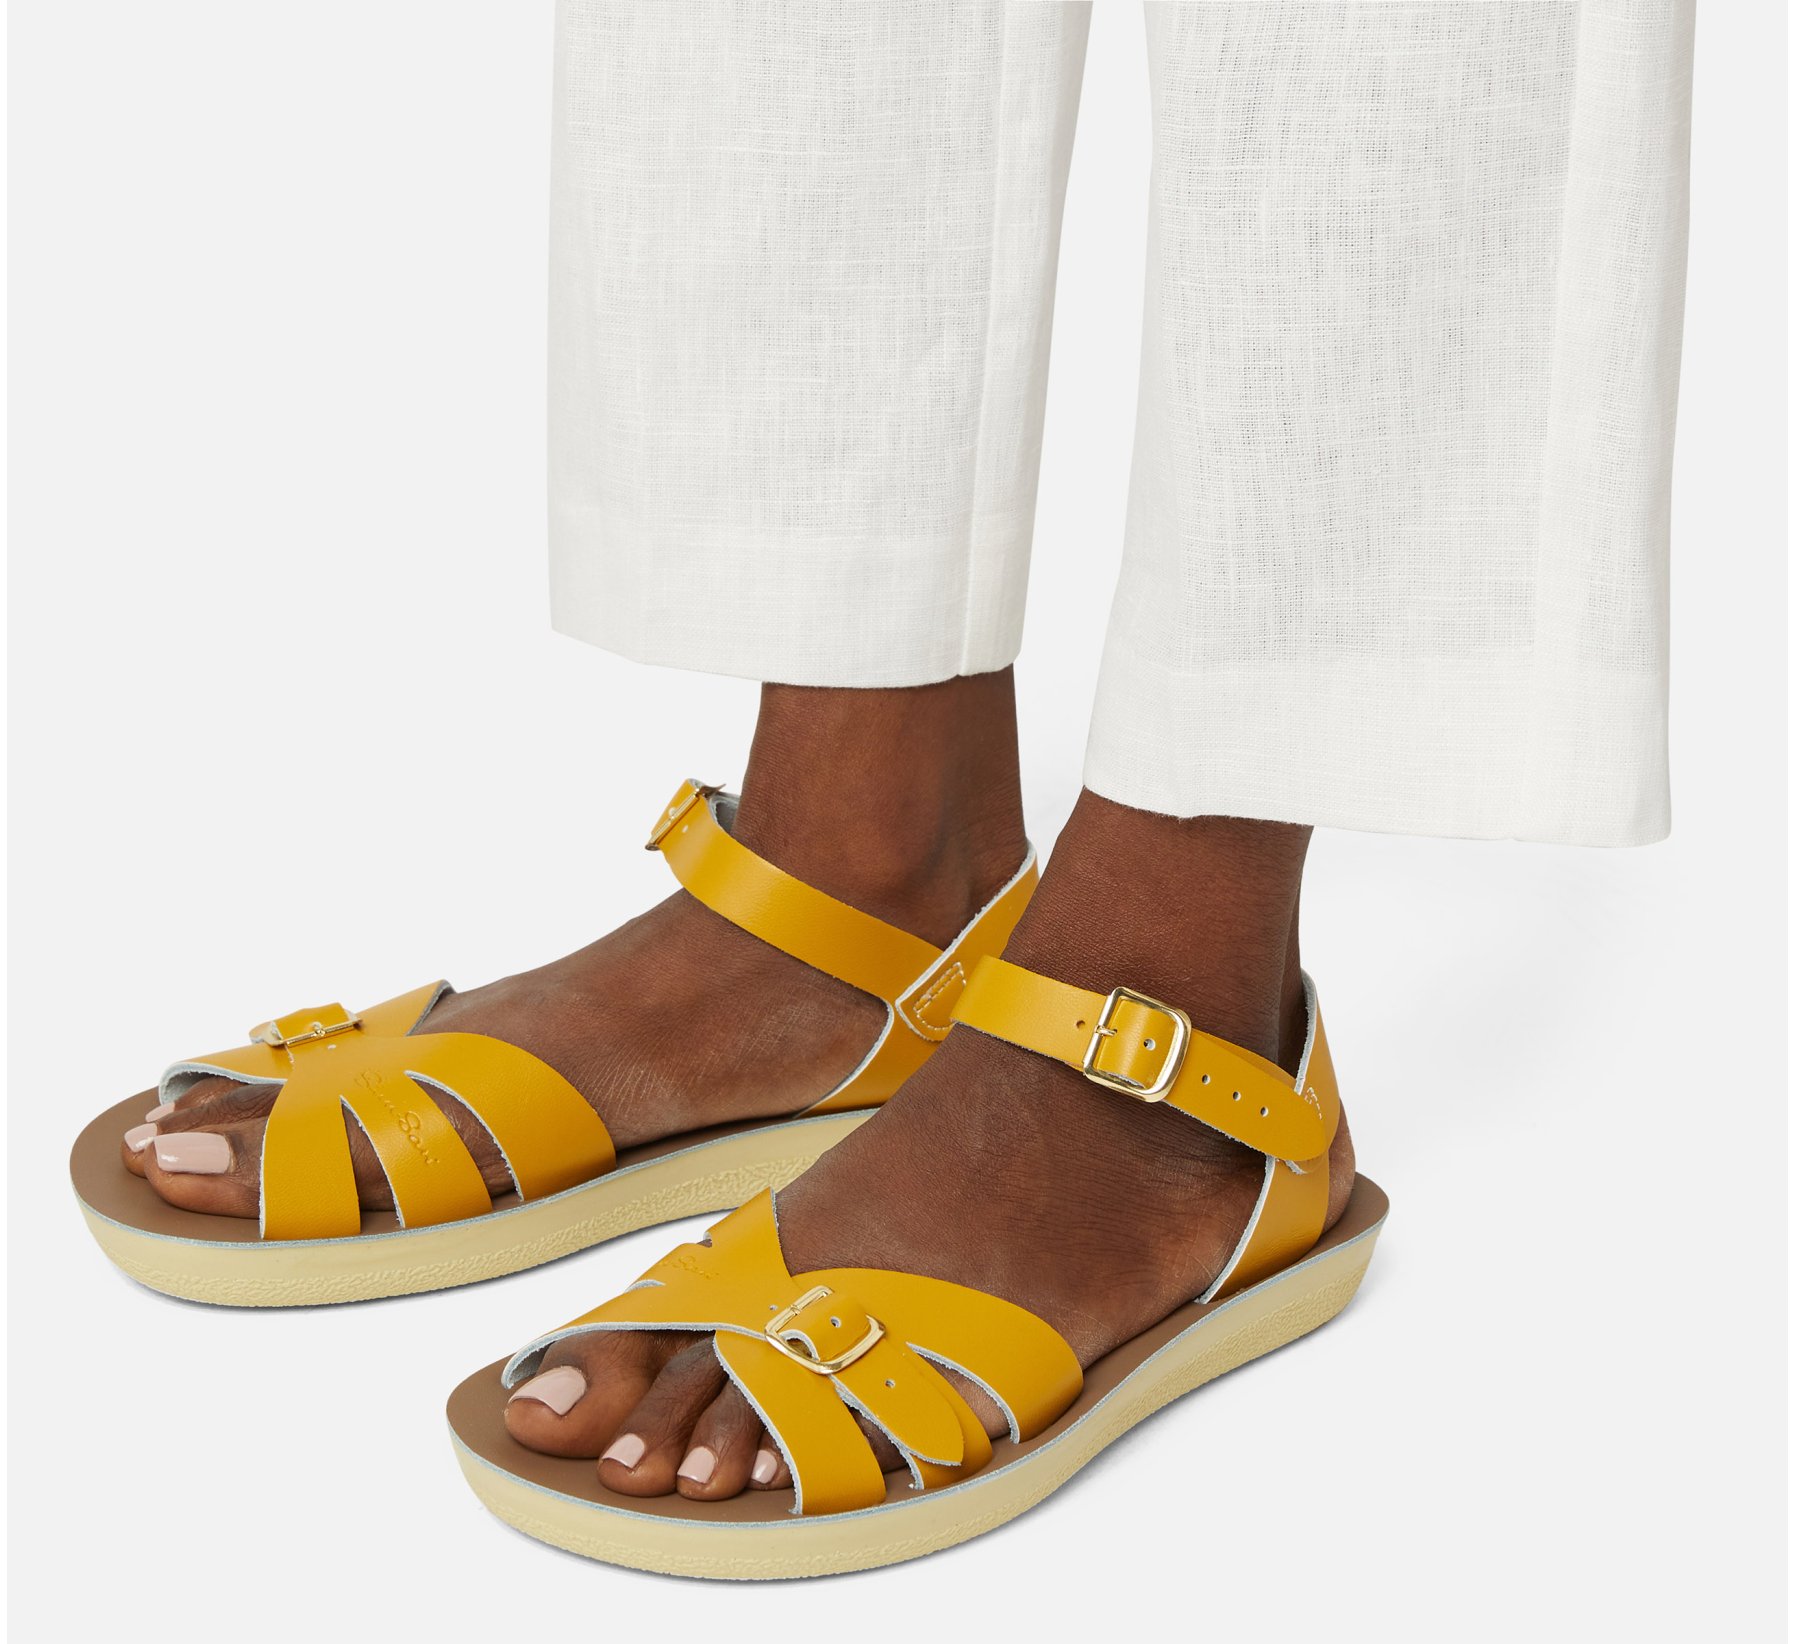 Boardwalk Mustard Sandal - Salt Water Sandals